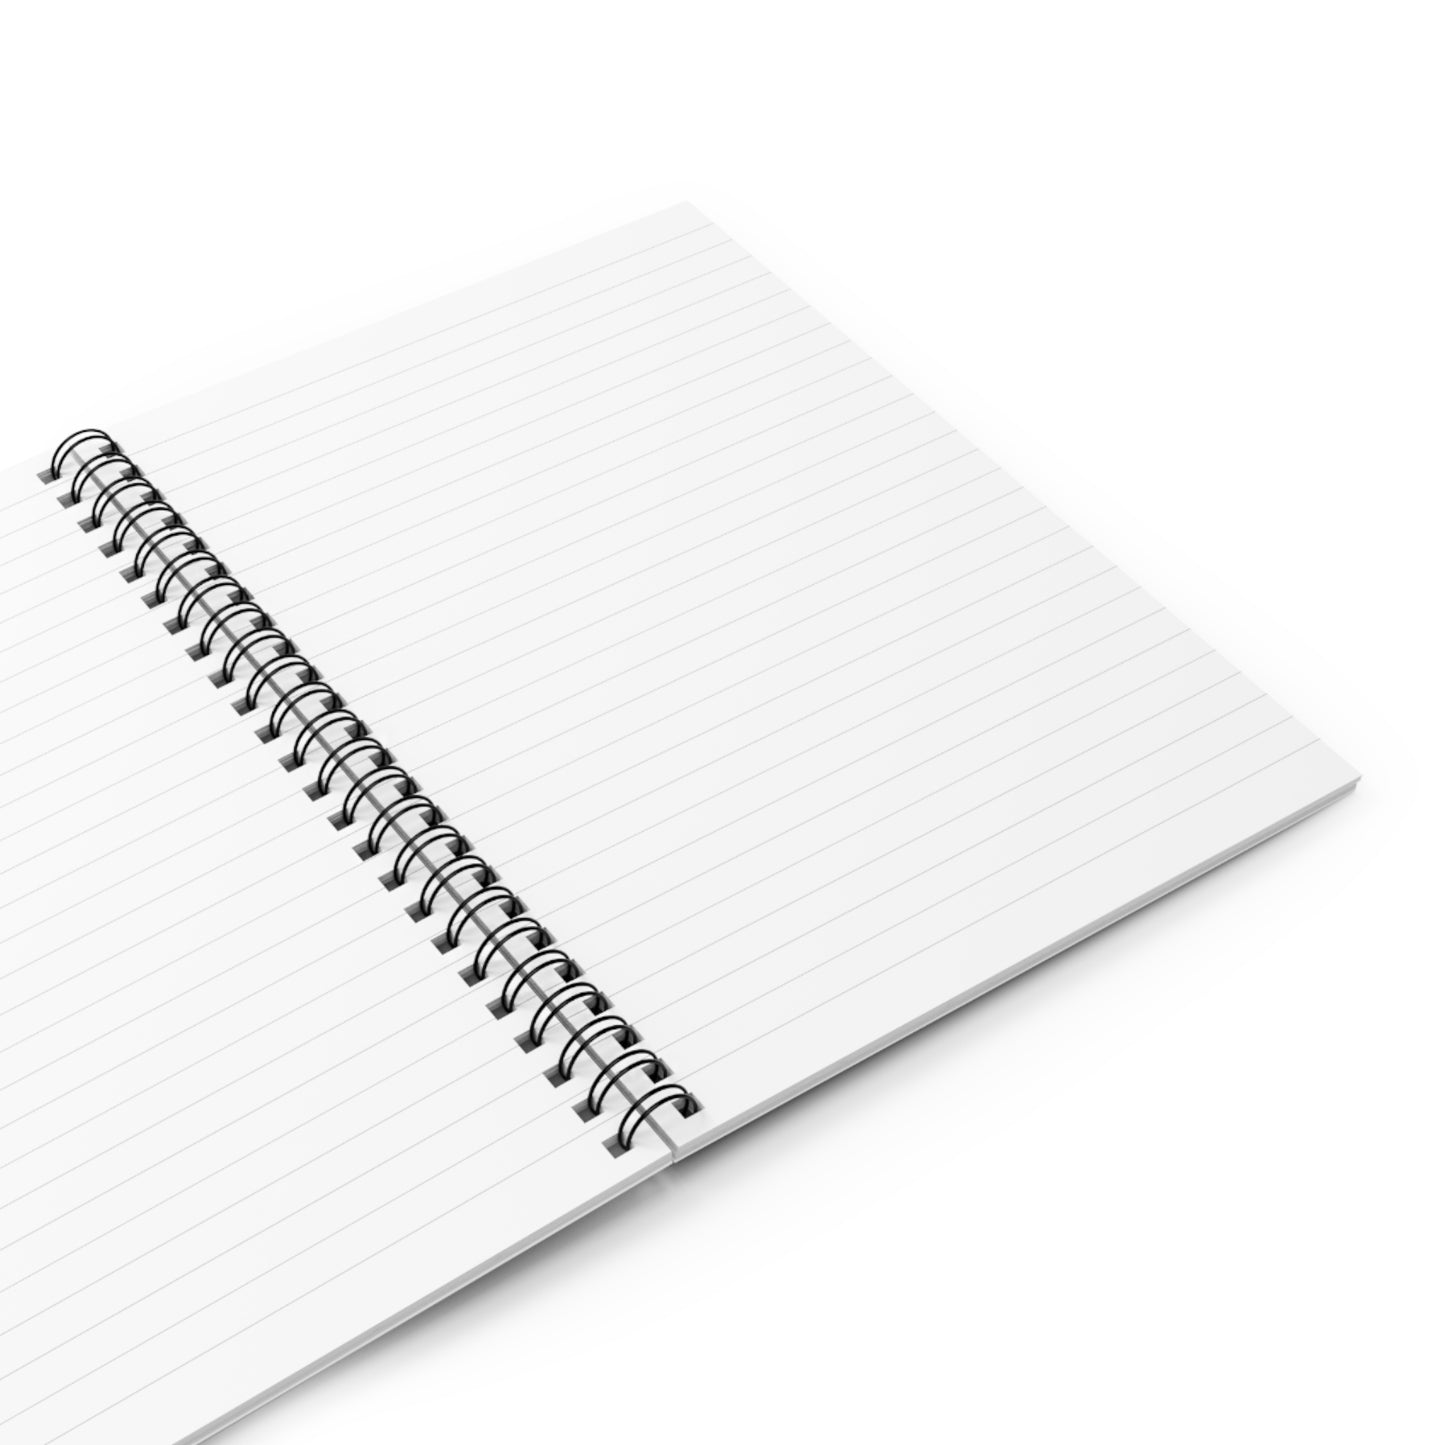 Excuses Mini Notebook - White on Blue